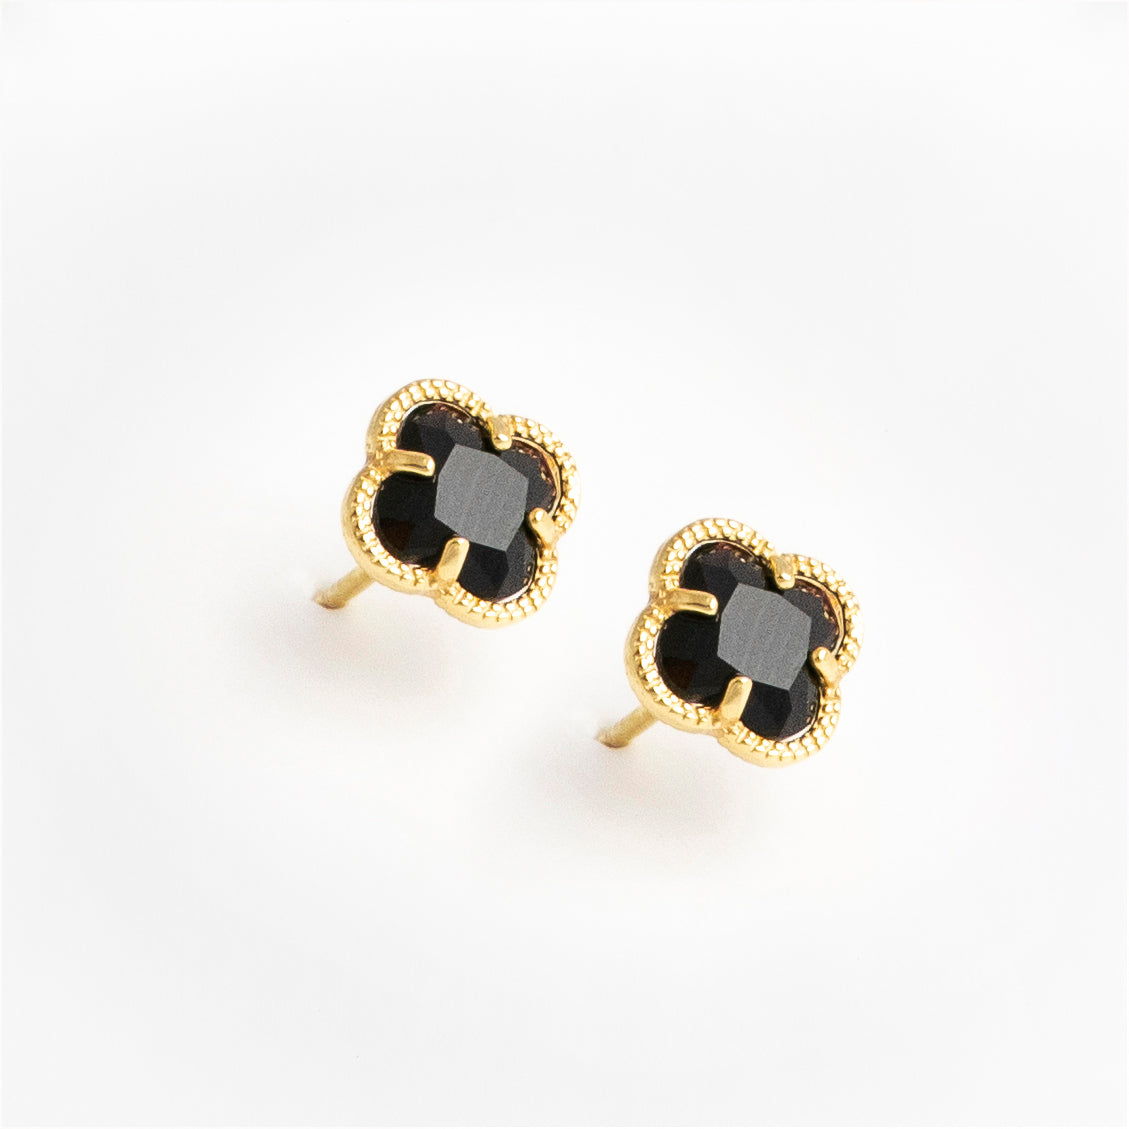 CLOVERLEAF Gold Earrings with Black Quartz